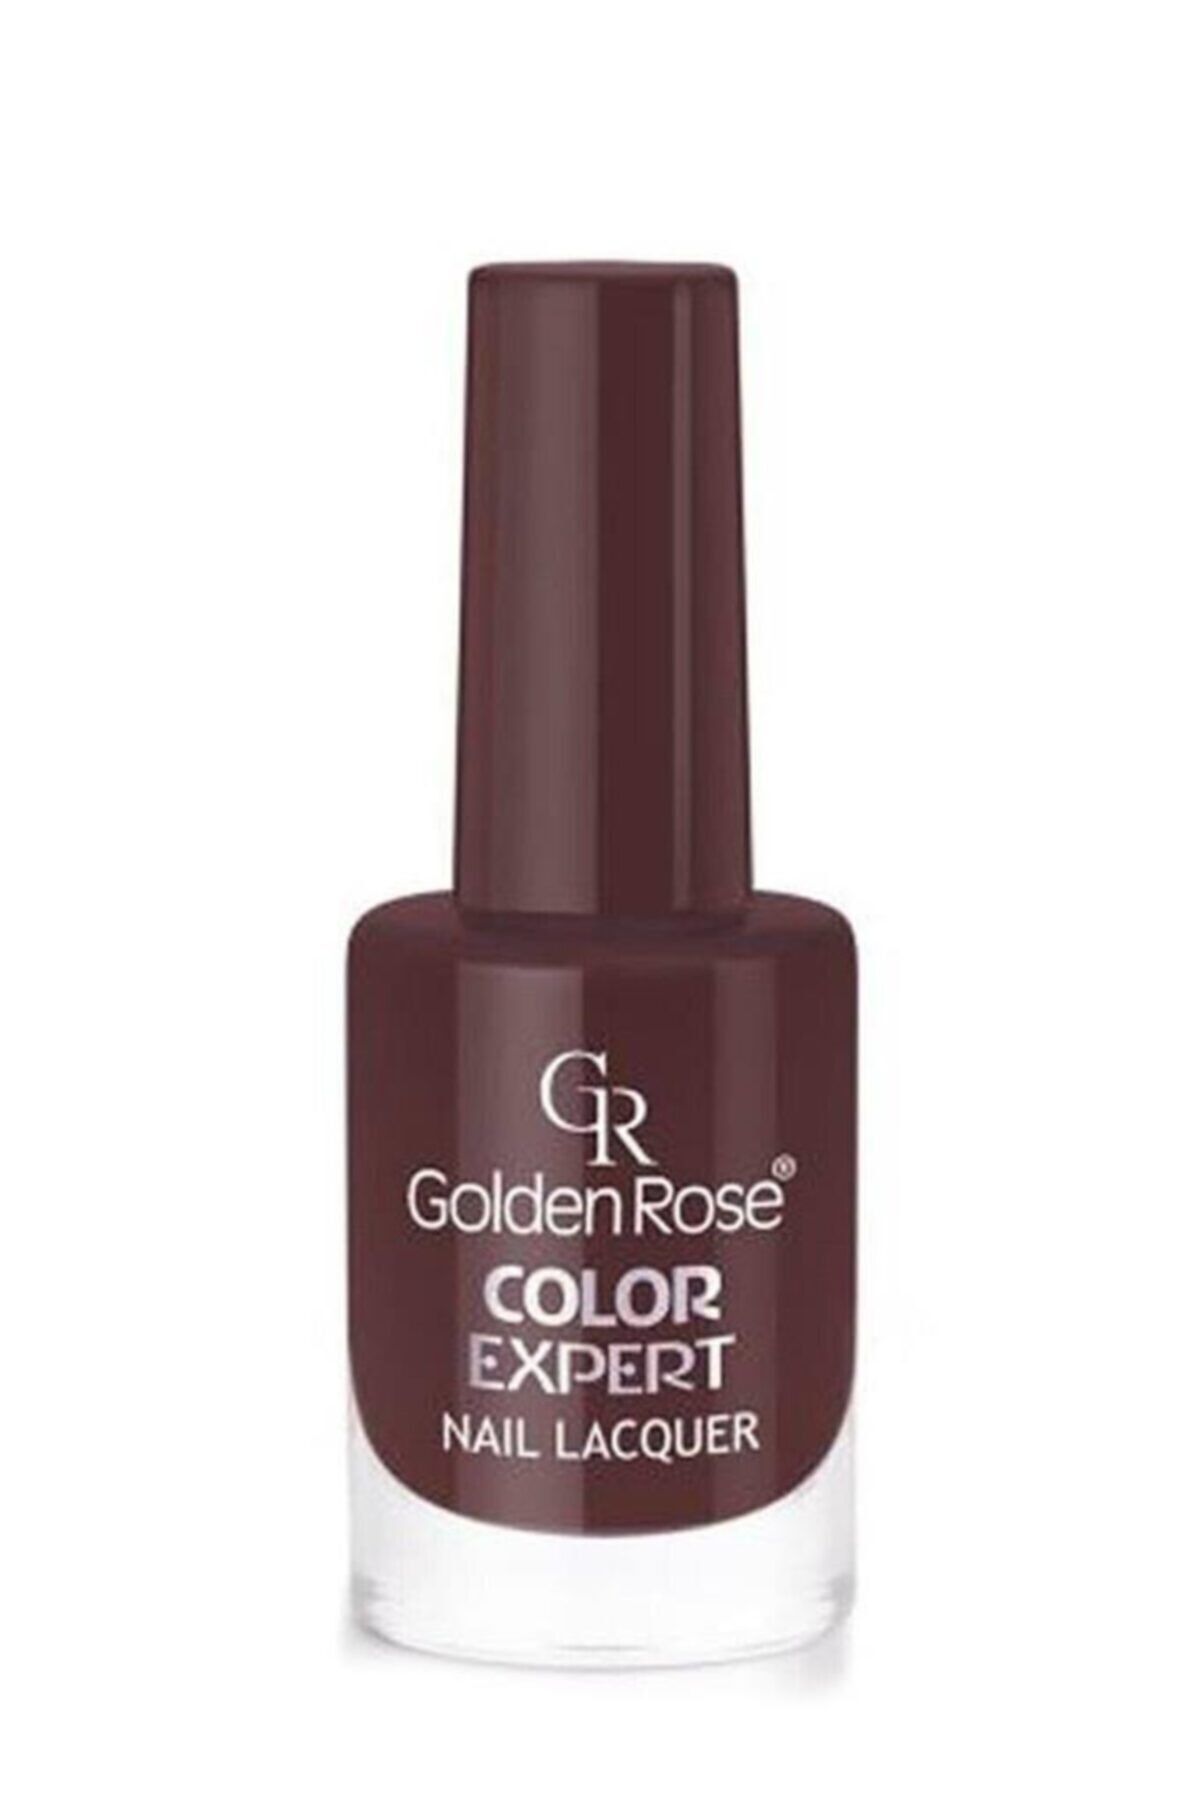 Golden Rose Oje - Color Expert Nail Lacquer No: 75 8691190703752 Ogcx